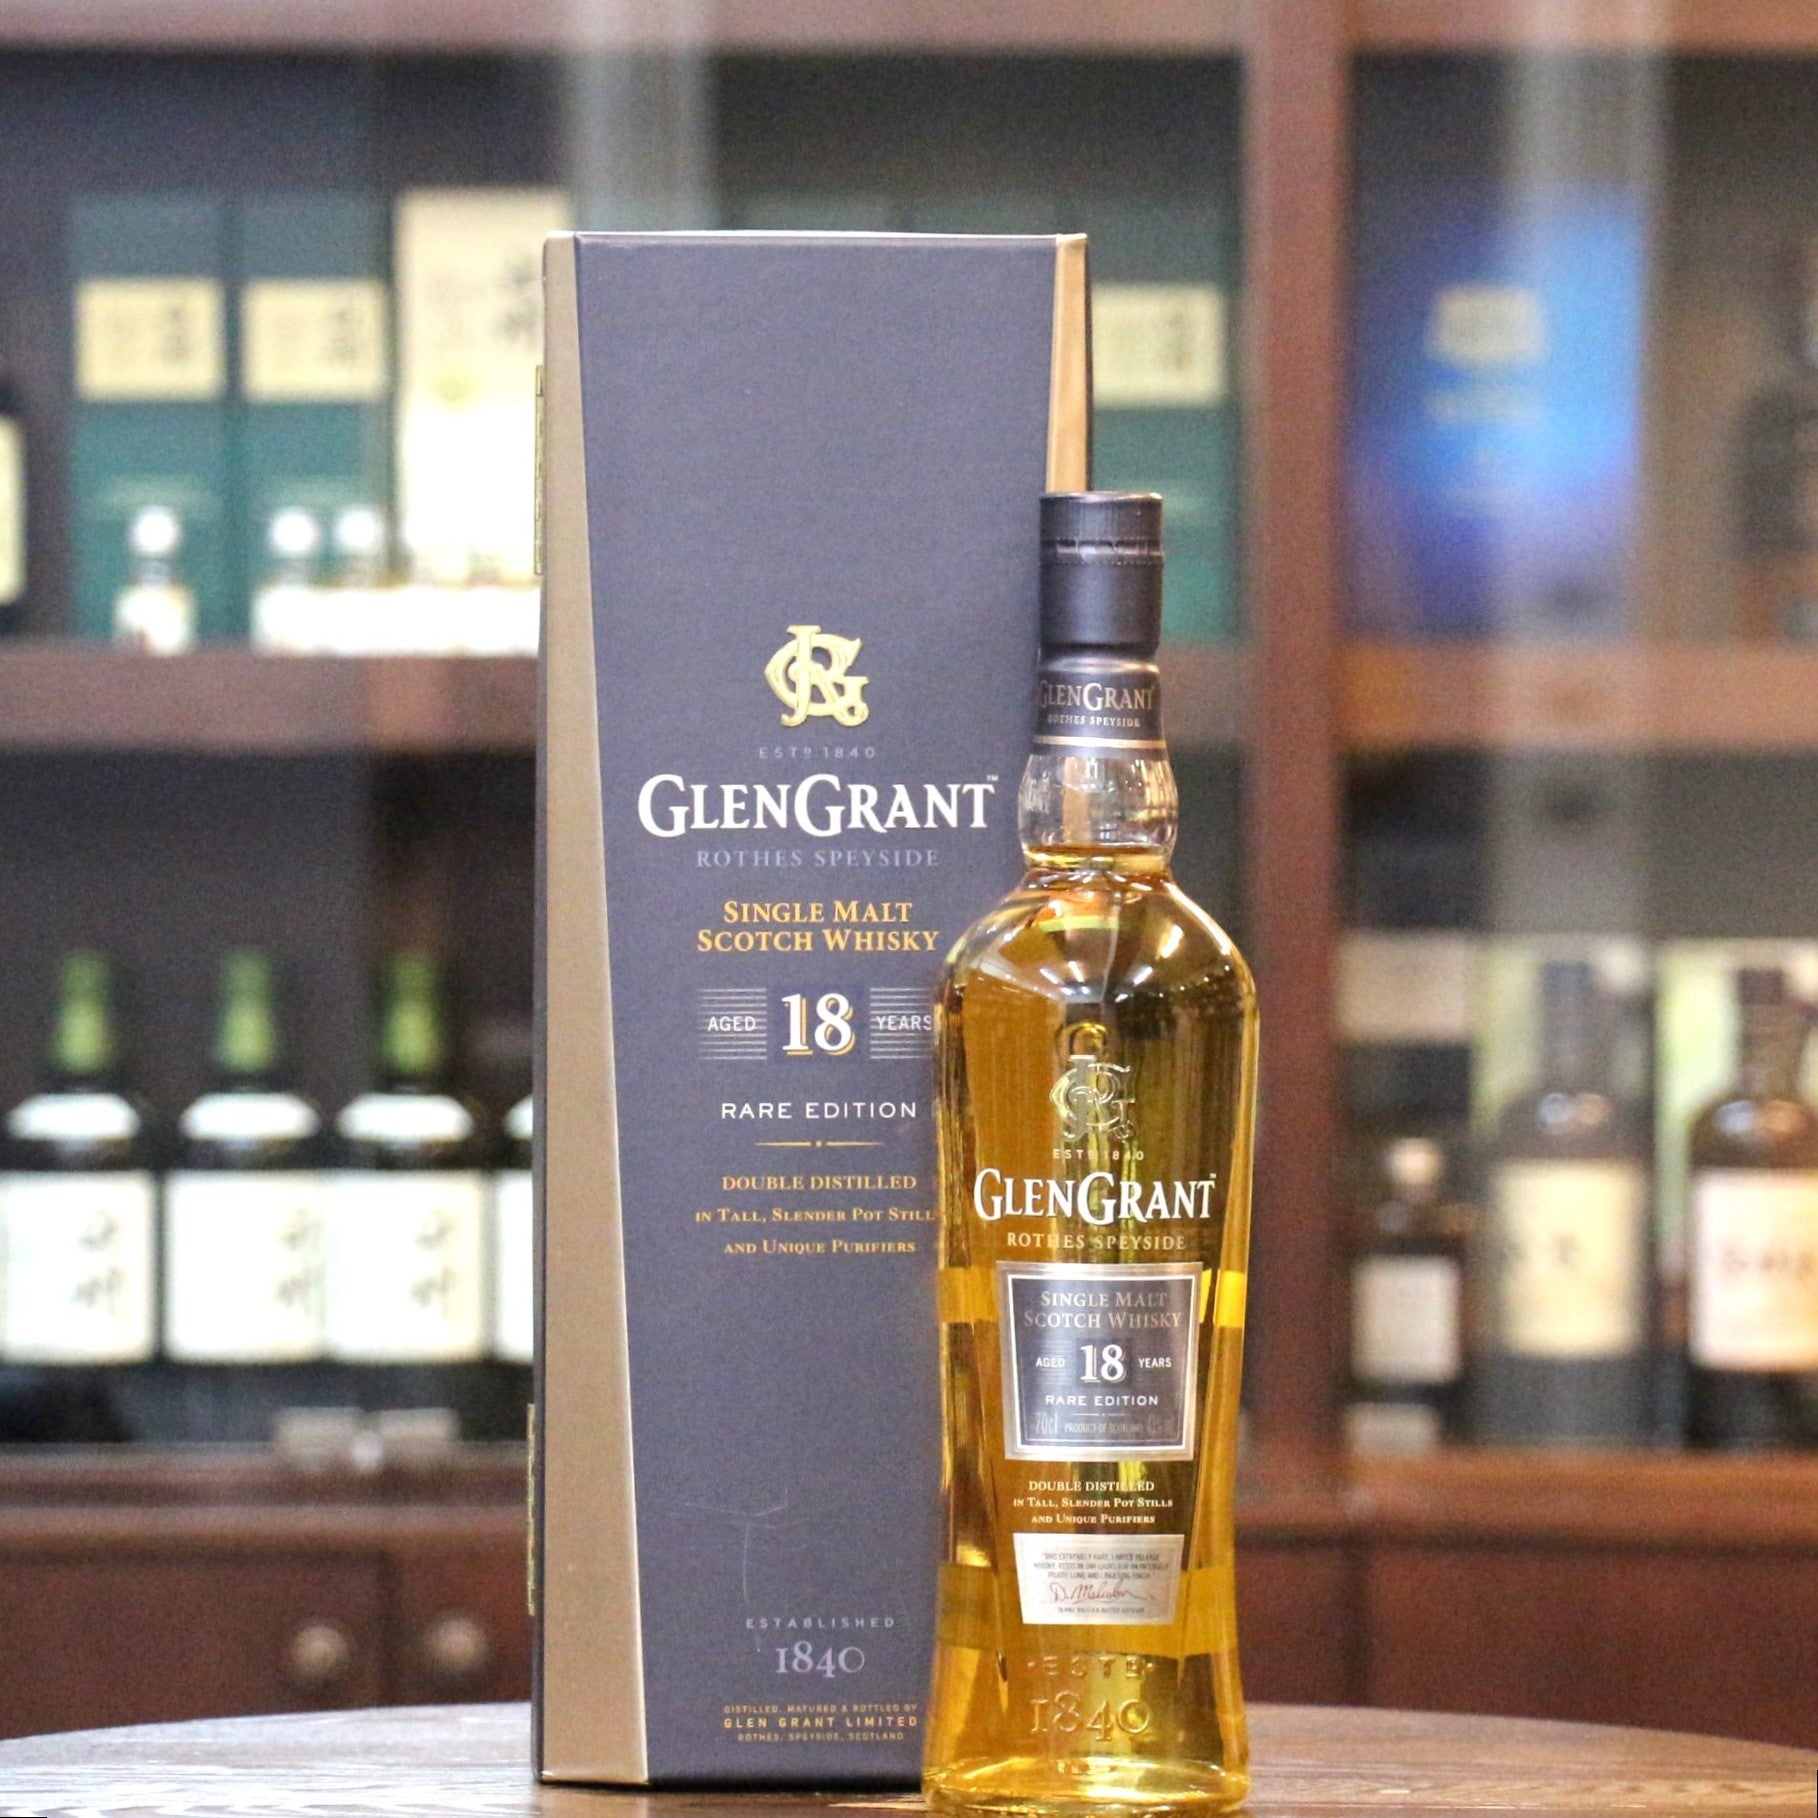 Glen Grant 18 Years Old "Rare Edition" Single Malt Scotch Whisky